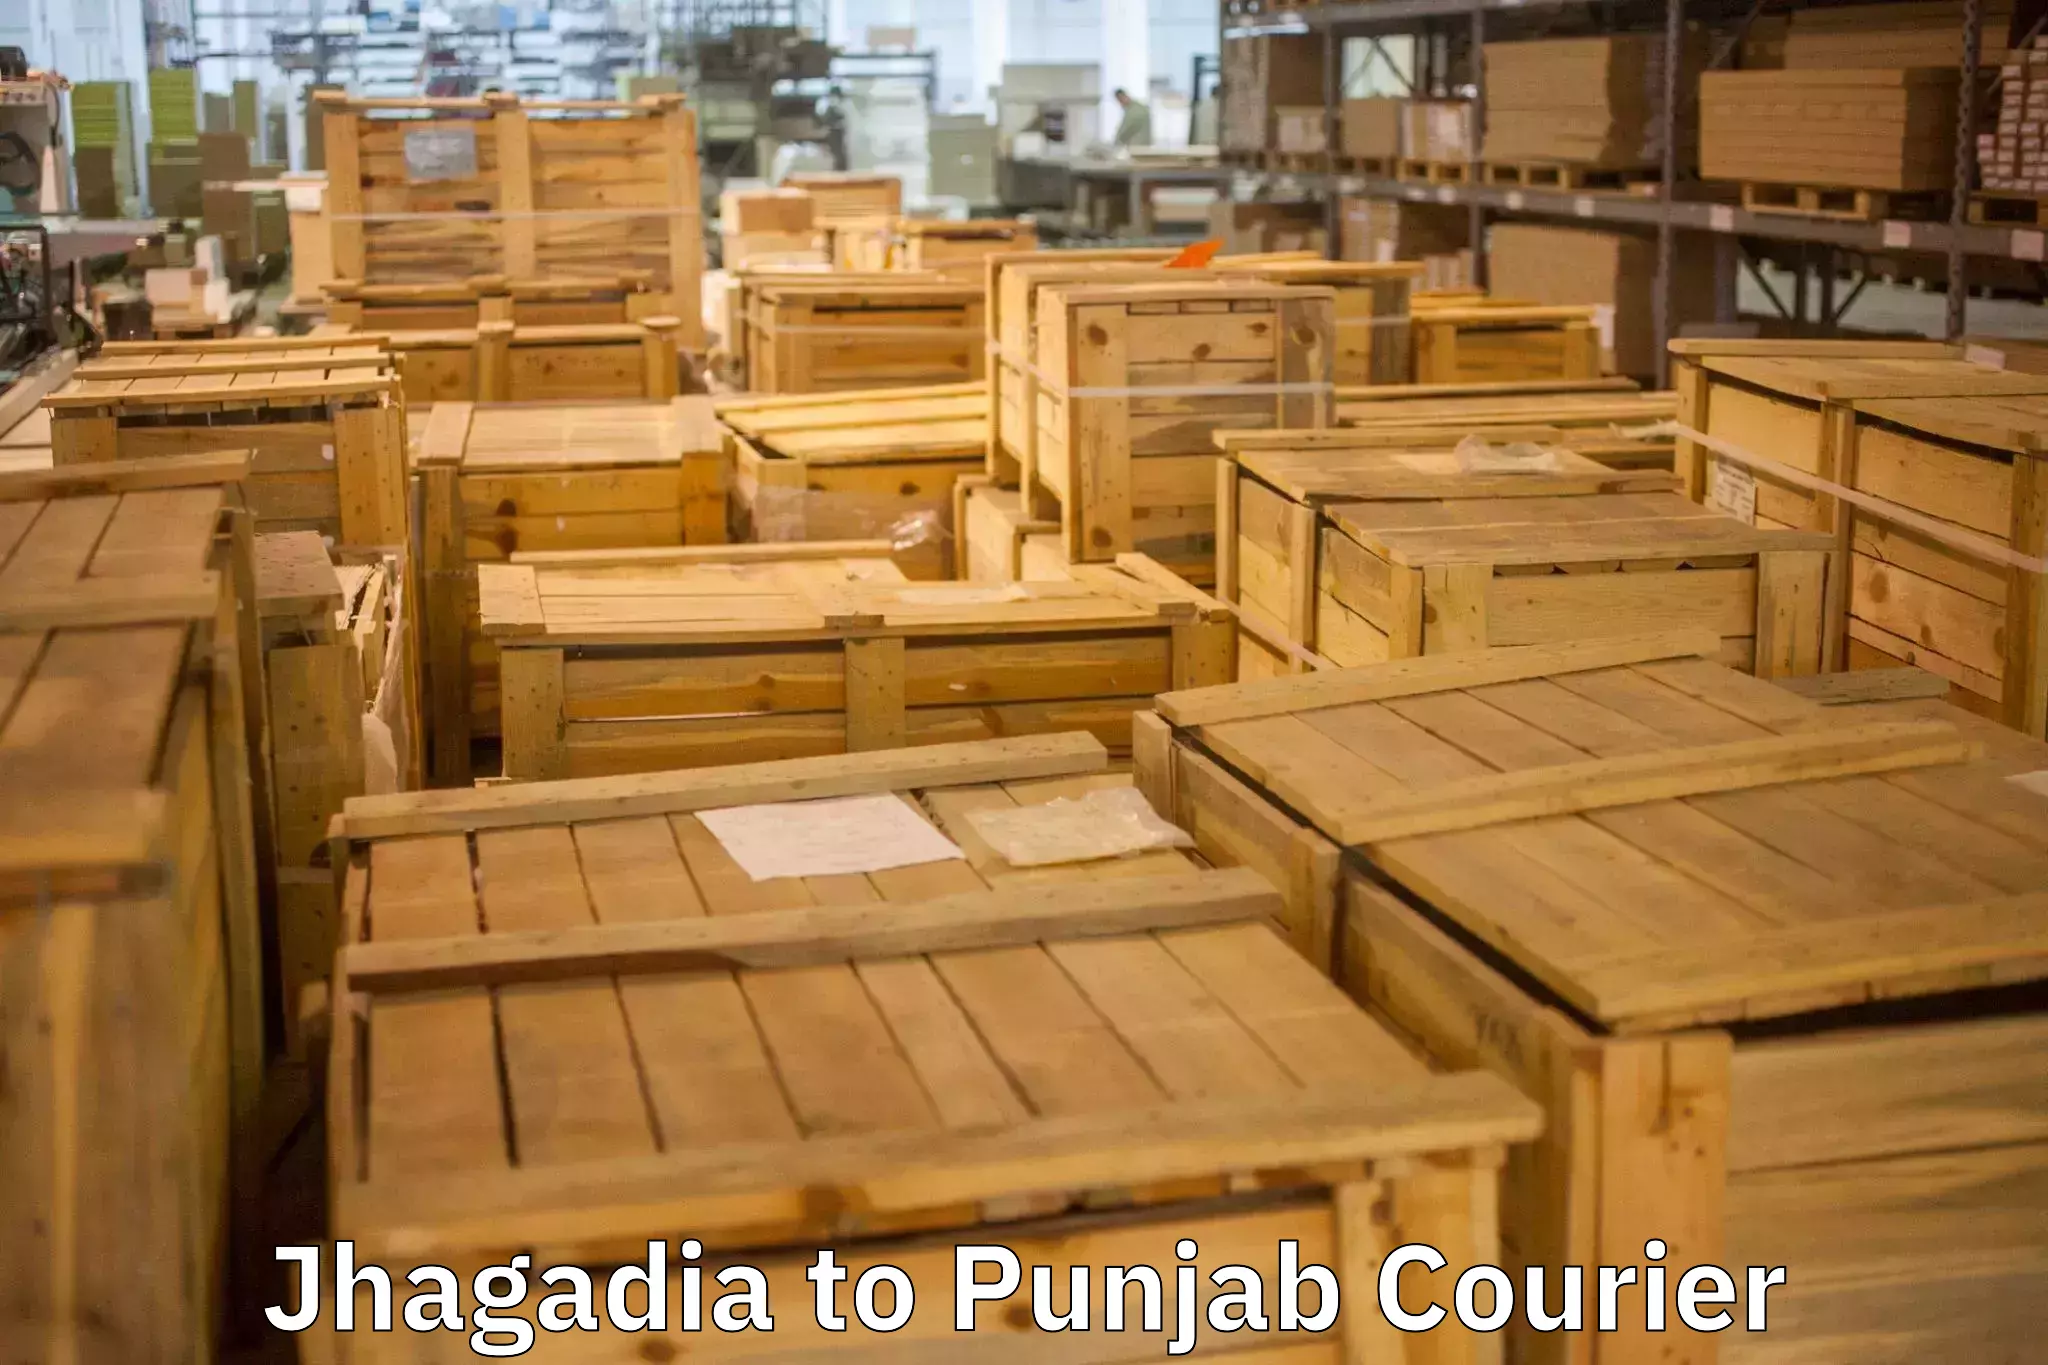 Quality moving company Jhagadia to Punjab